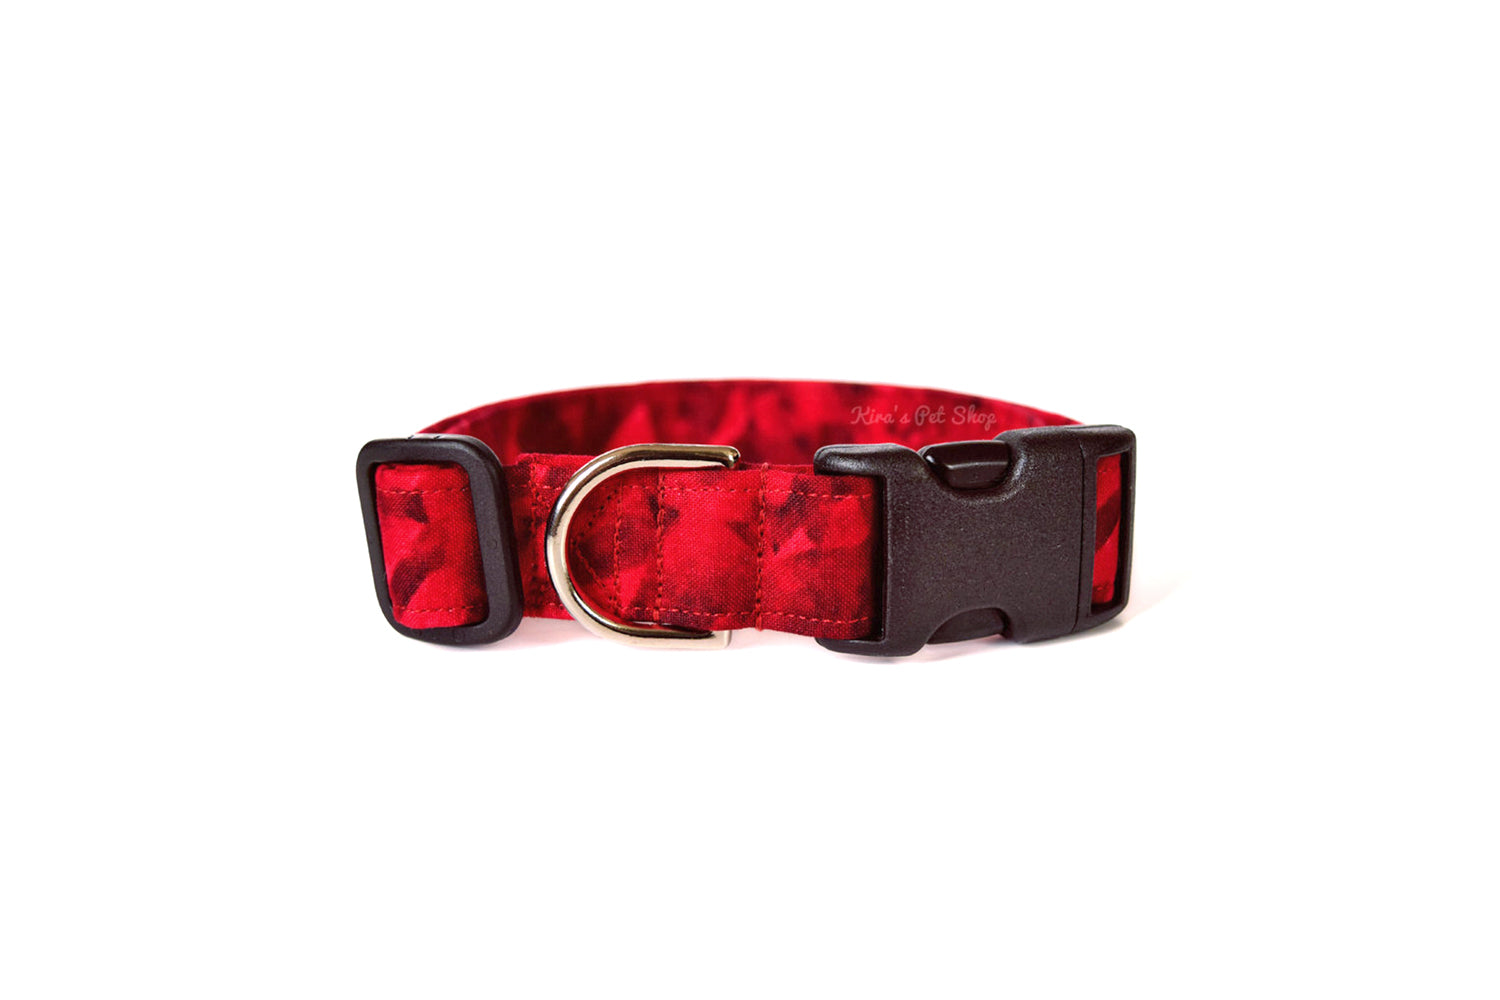 Ruby Red Crystal Dog Collar - Handmade by Kira's Pet Shop